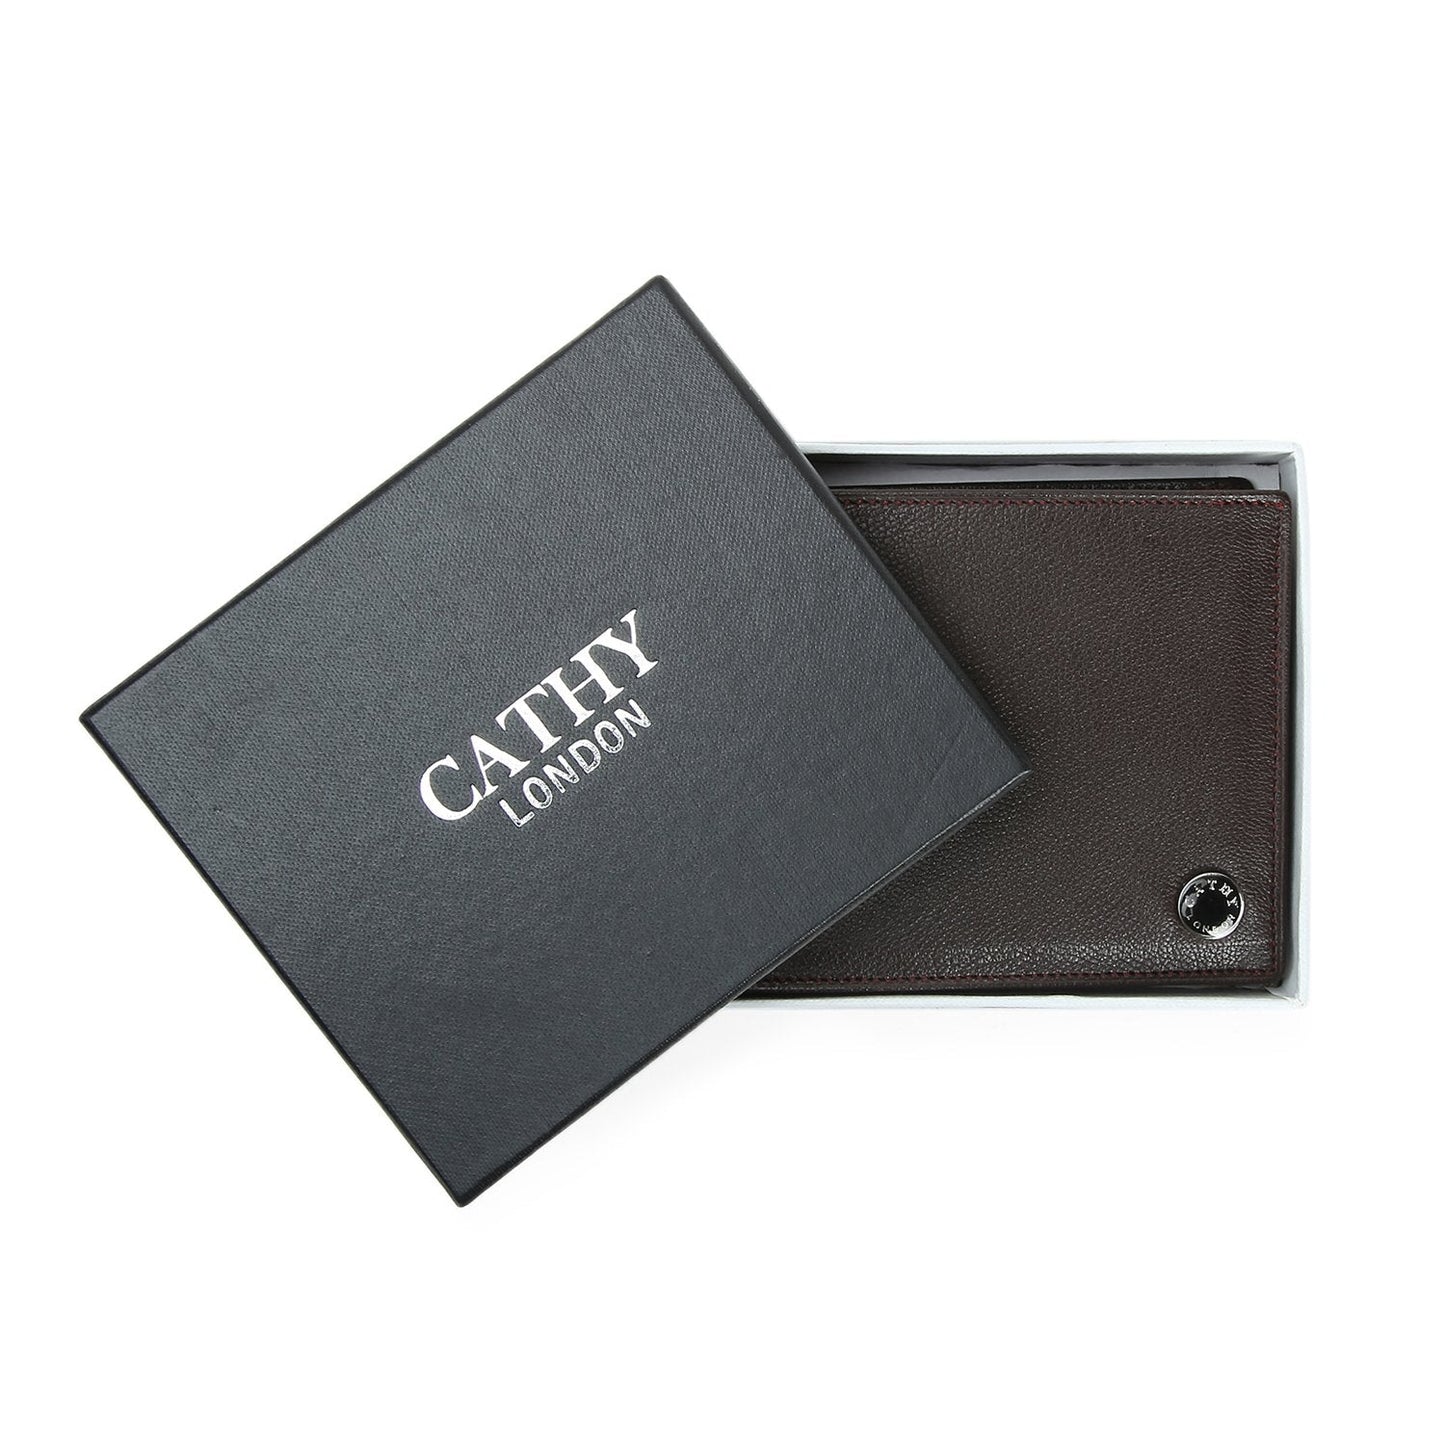 Brown Colour Bi-Fold Italian Leather Slim Wallet (7 Card Slot + 2 Hidden Compartment + 1 ID Slot + Coin Pocket + Cash Compartment)